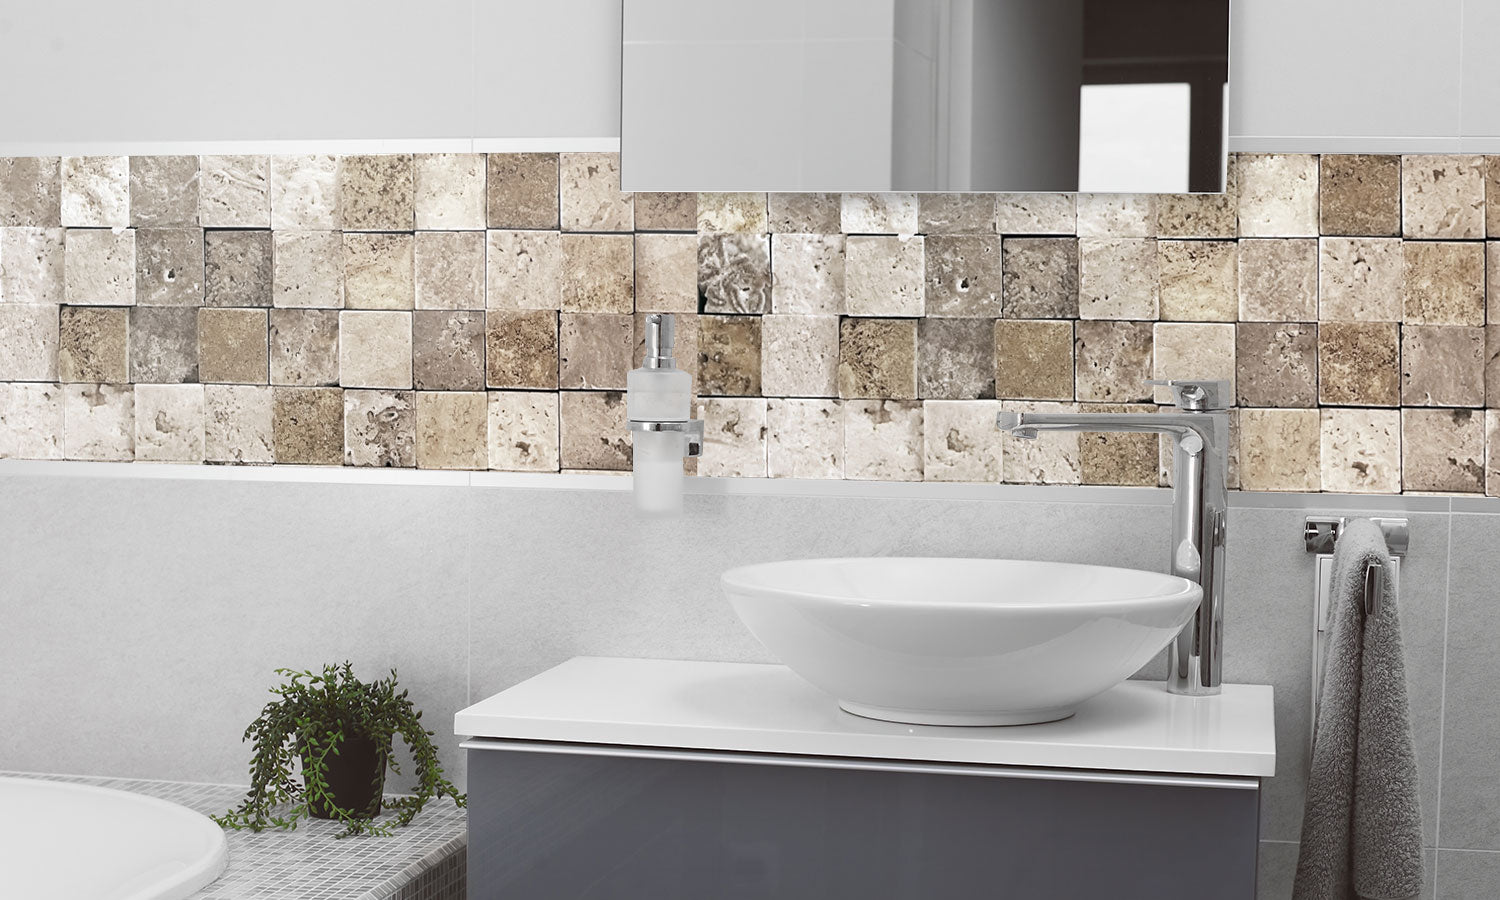 Paneli za kuhinje Marble stone wall -  Stakleni / PVC ploče / Pleksiglas -  sa printom za kuhinju, Zidne obloge PKU070